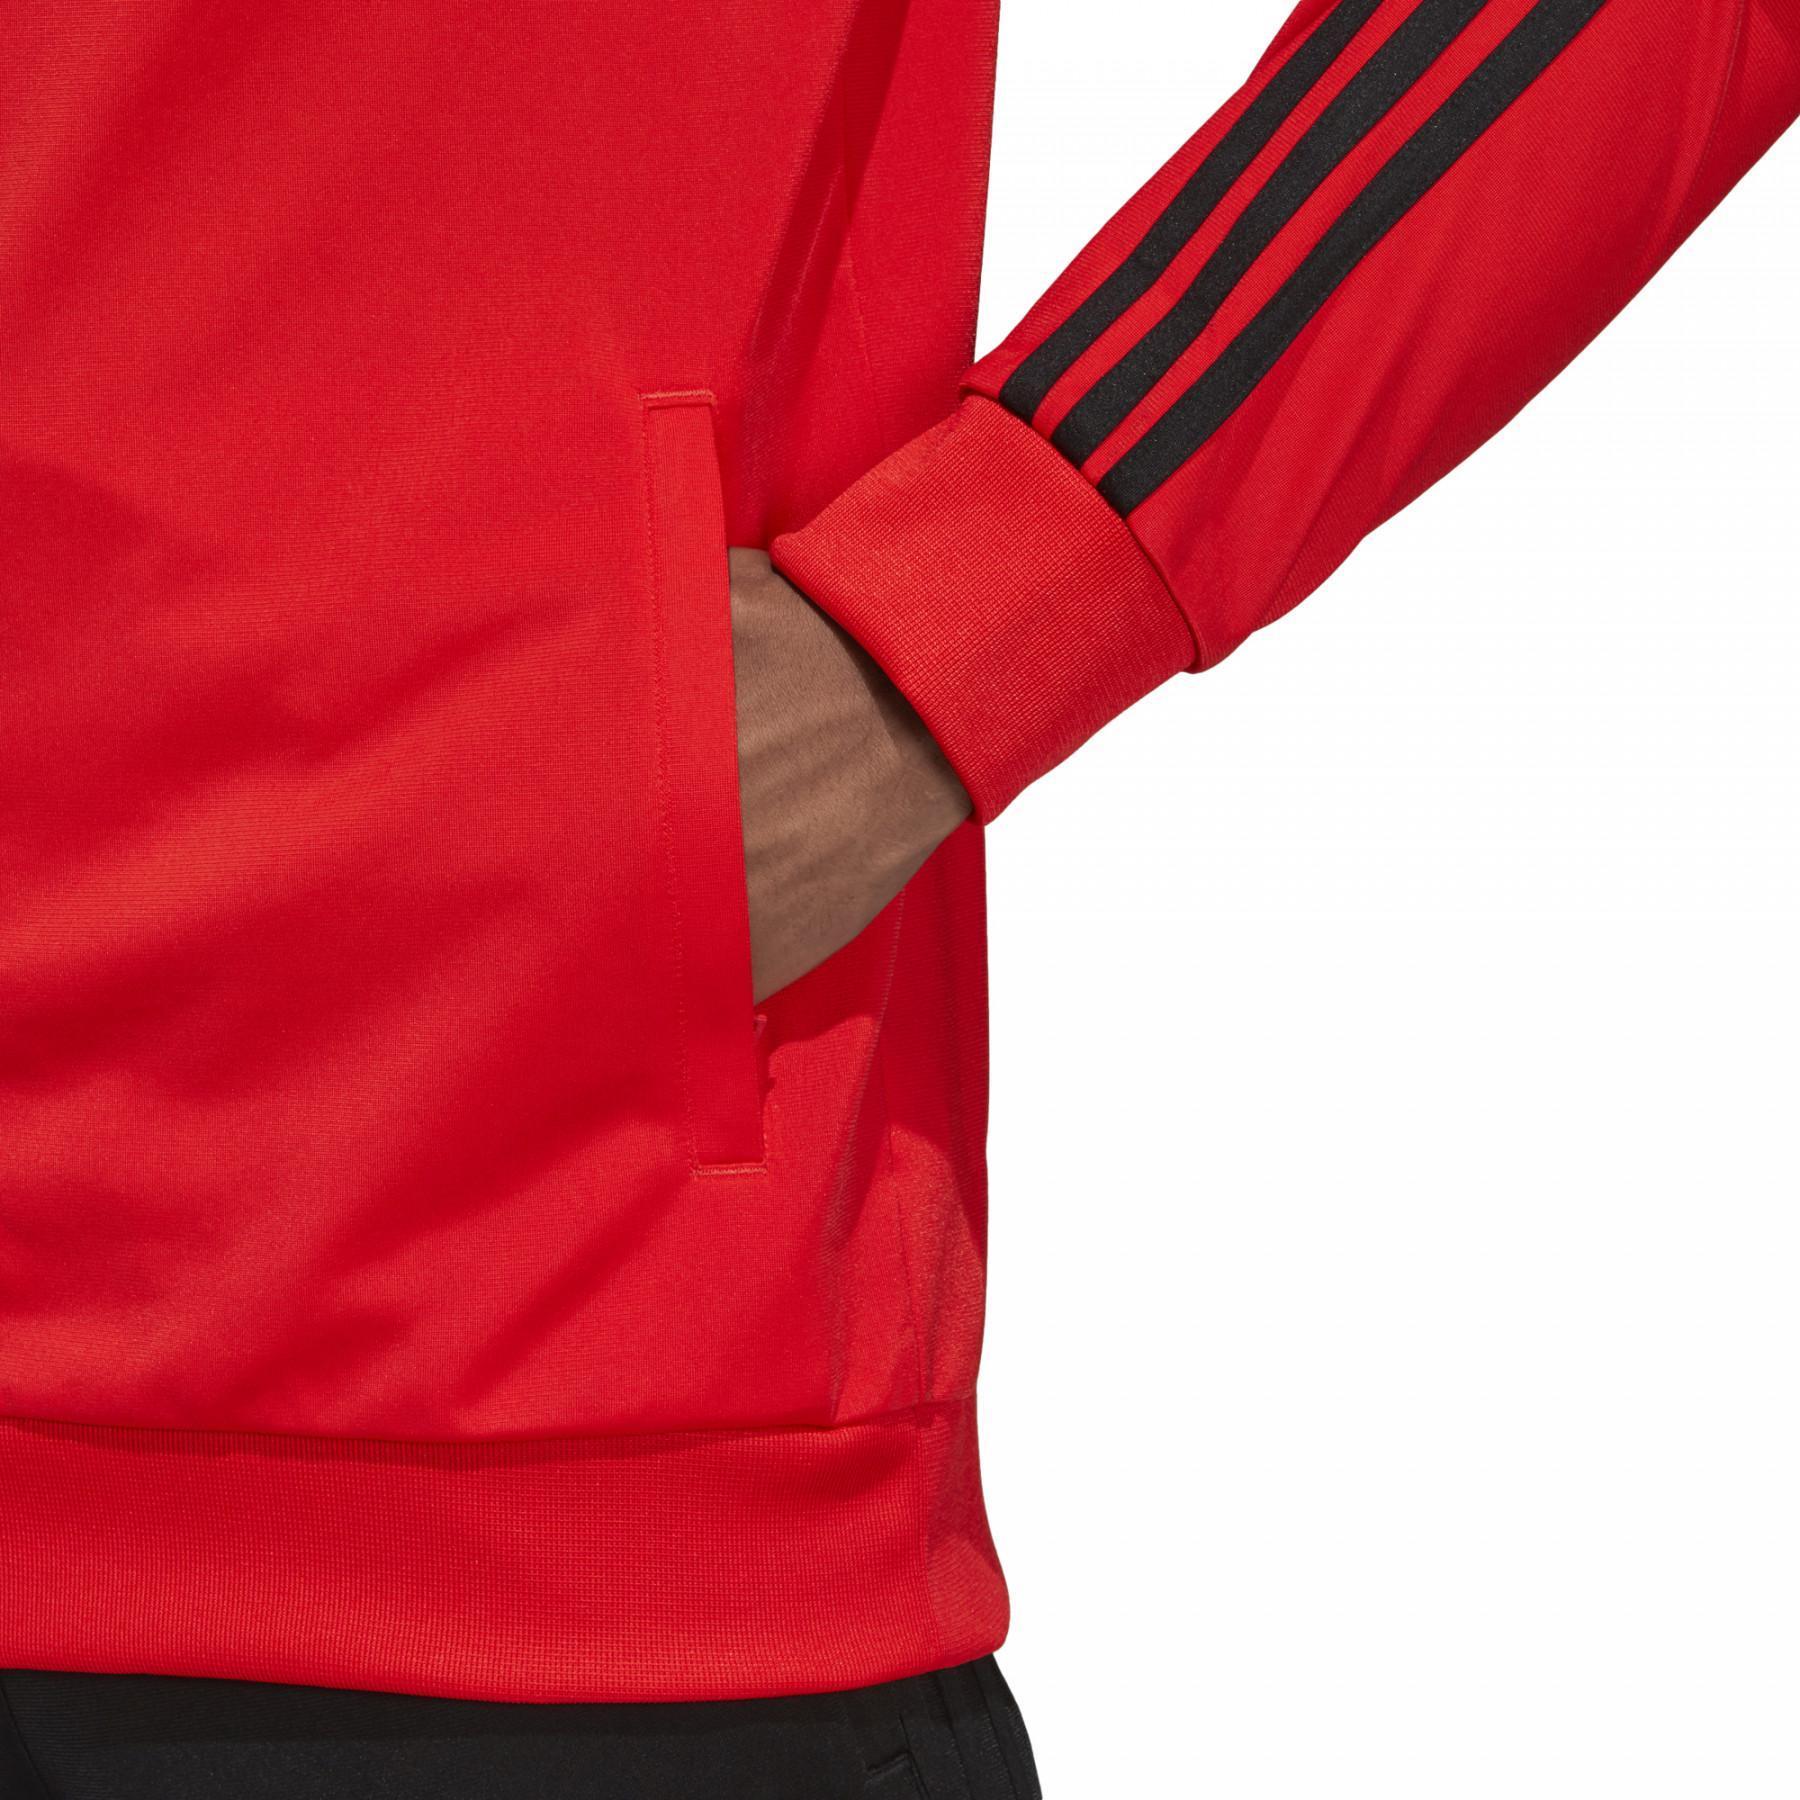 Sweat jacket adidas Essentials 3-Stripes Tricot